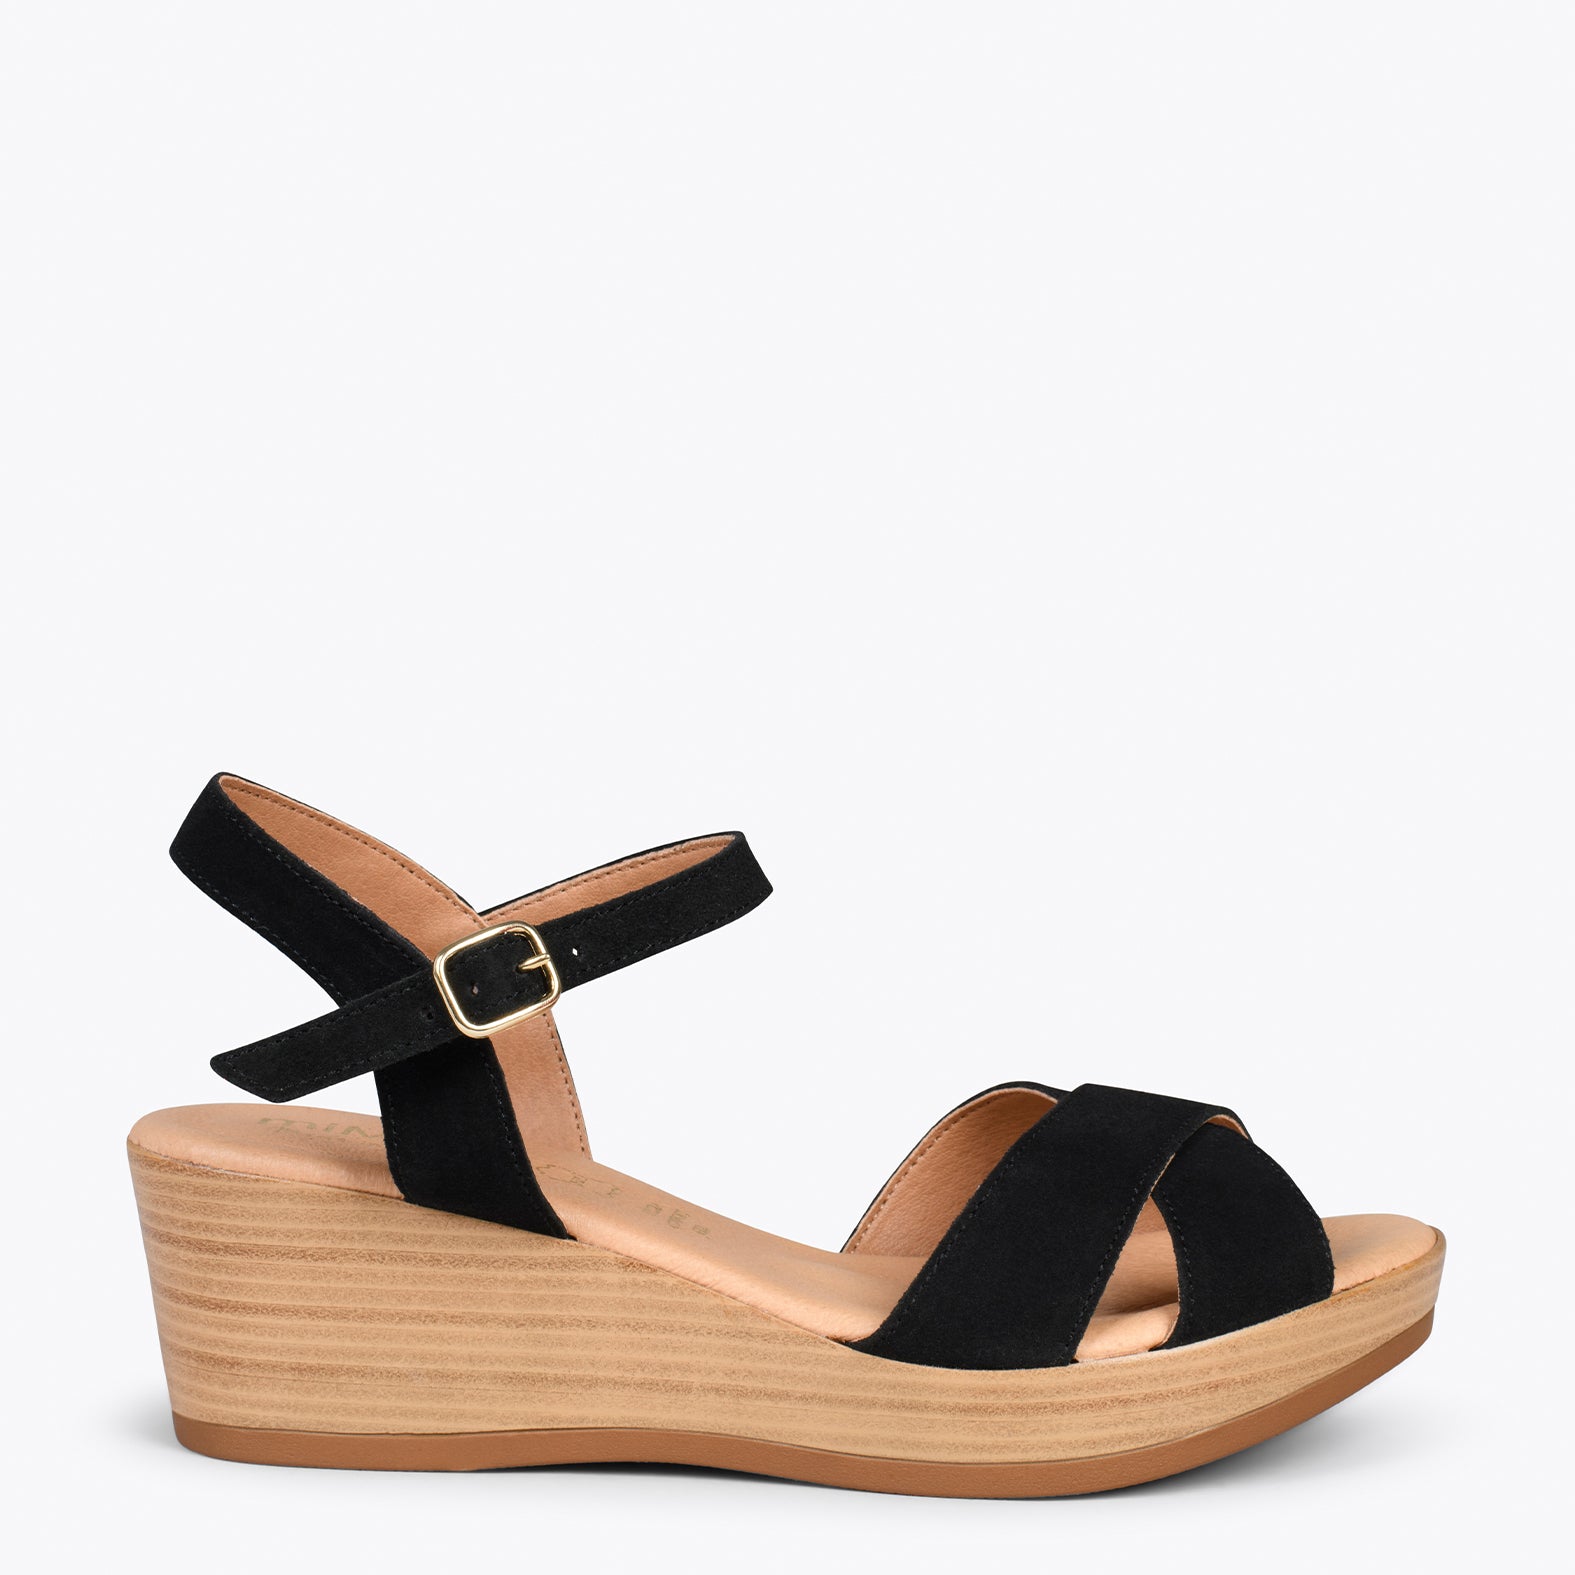 SEA- BLACK comfortable sandal with wedge